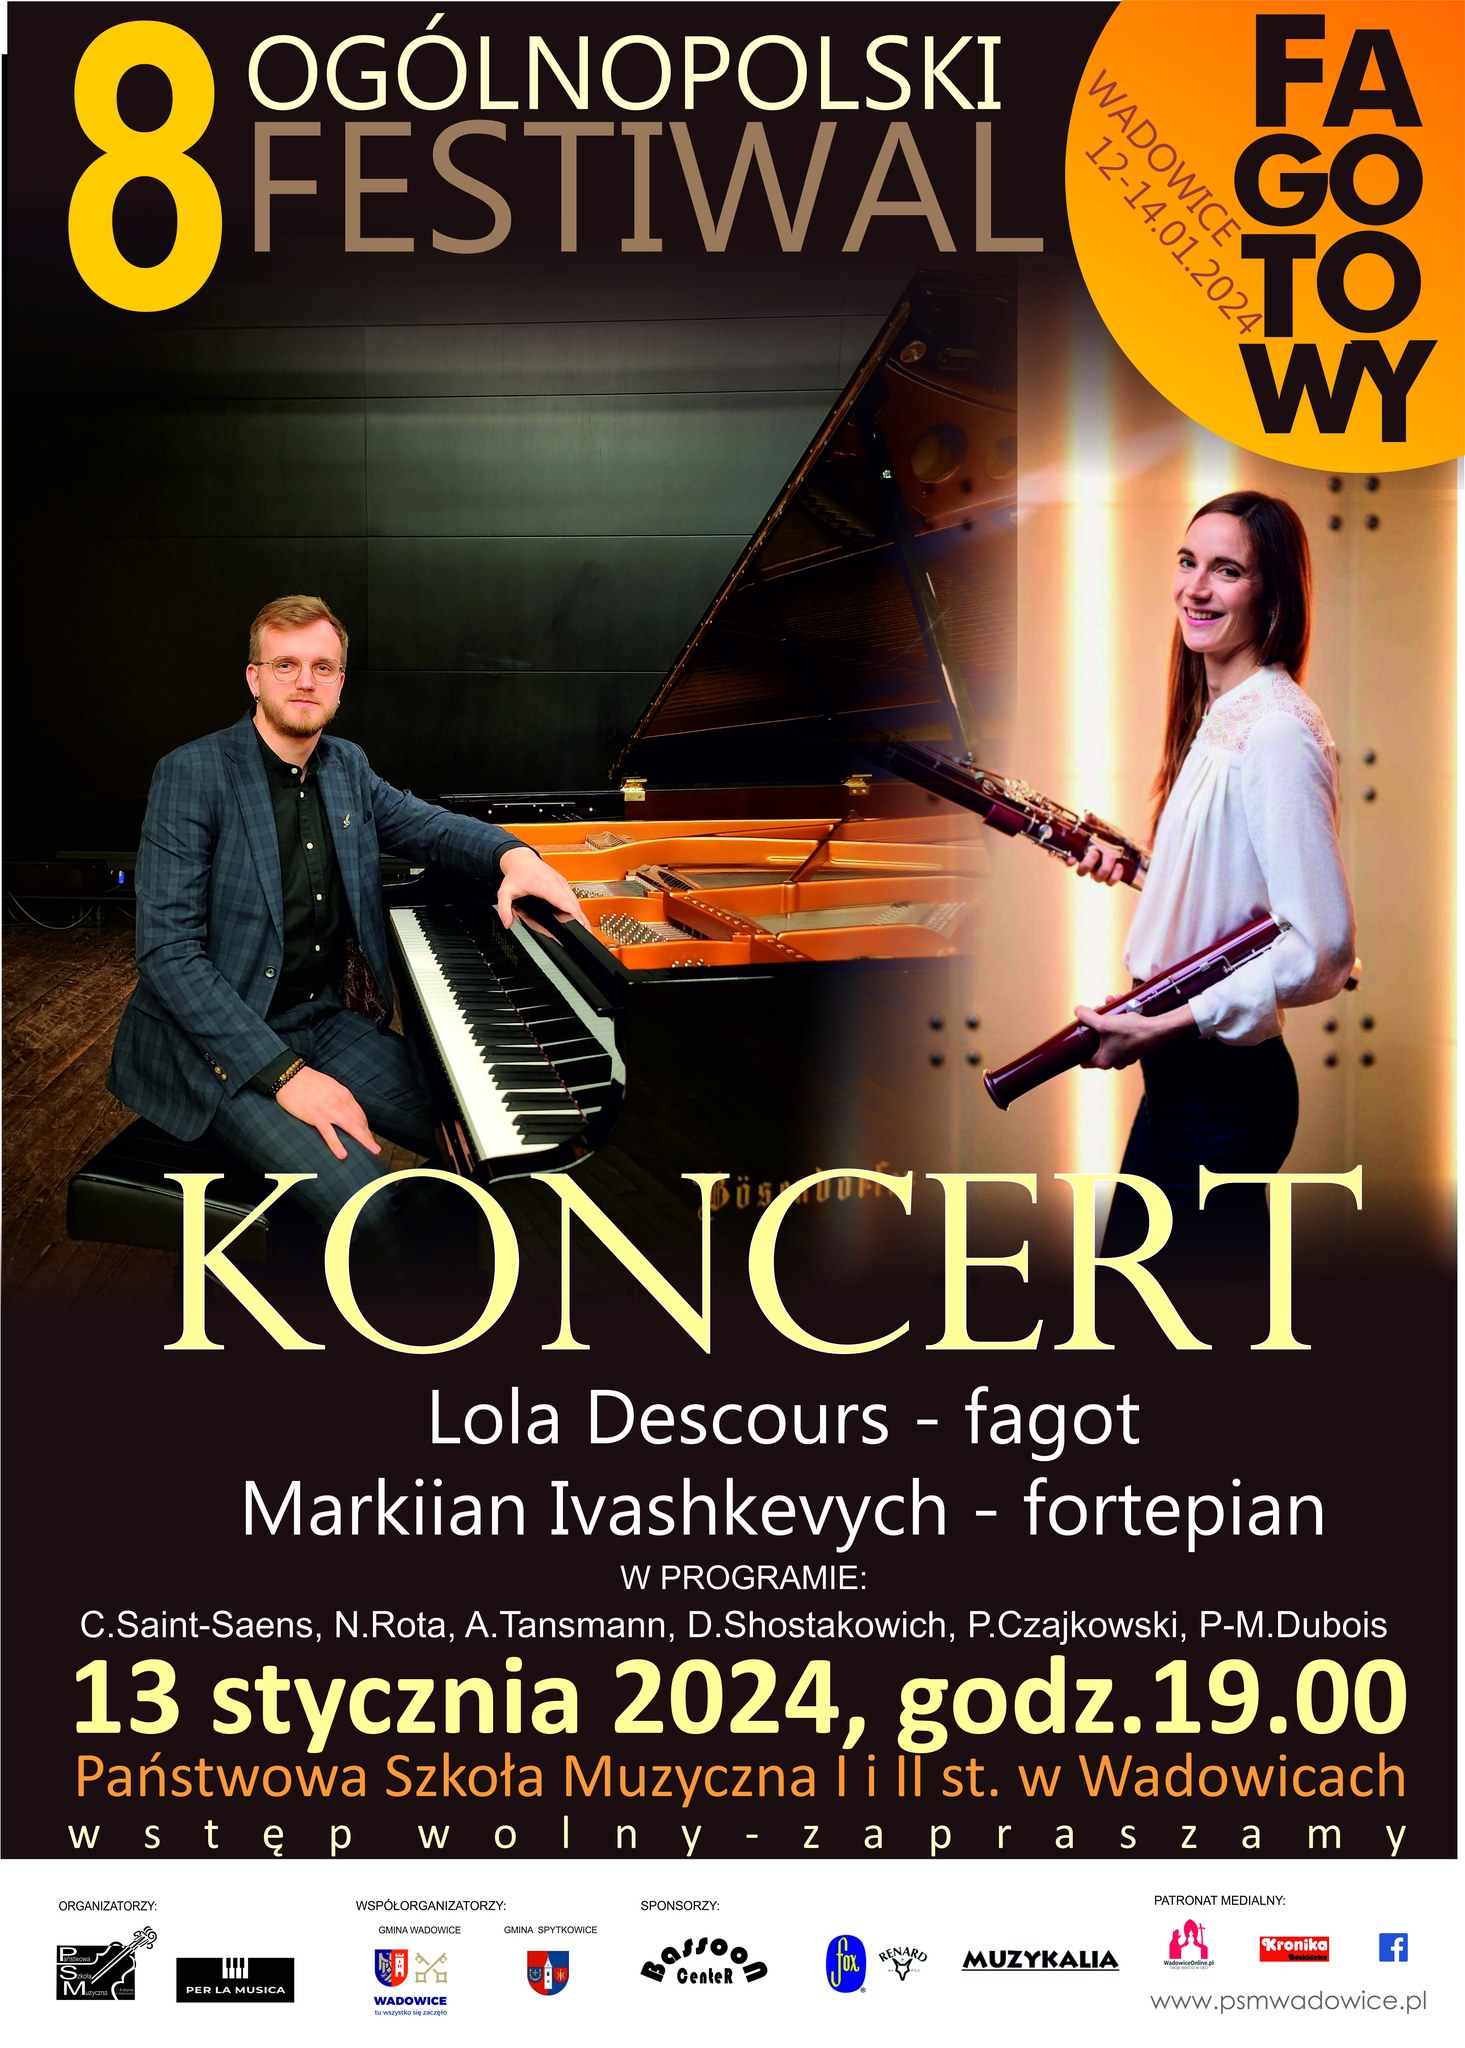 Koncert Lola Descours i Markiian Ivashkevych 13.01.2024